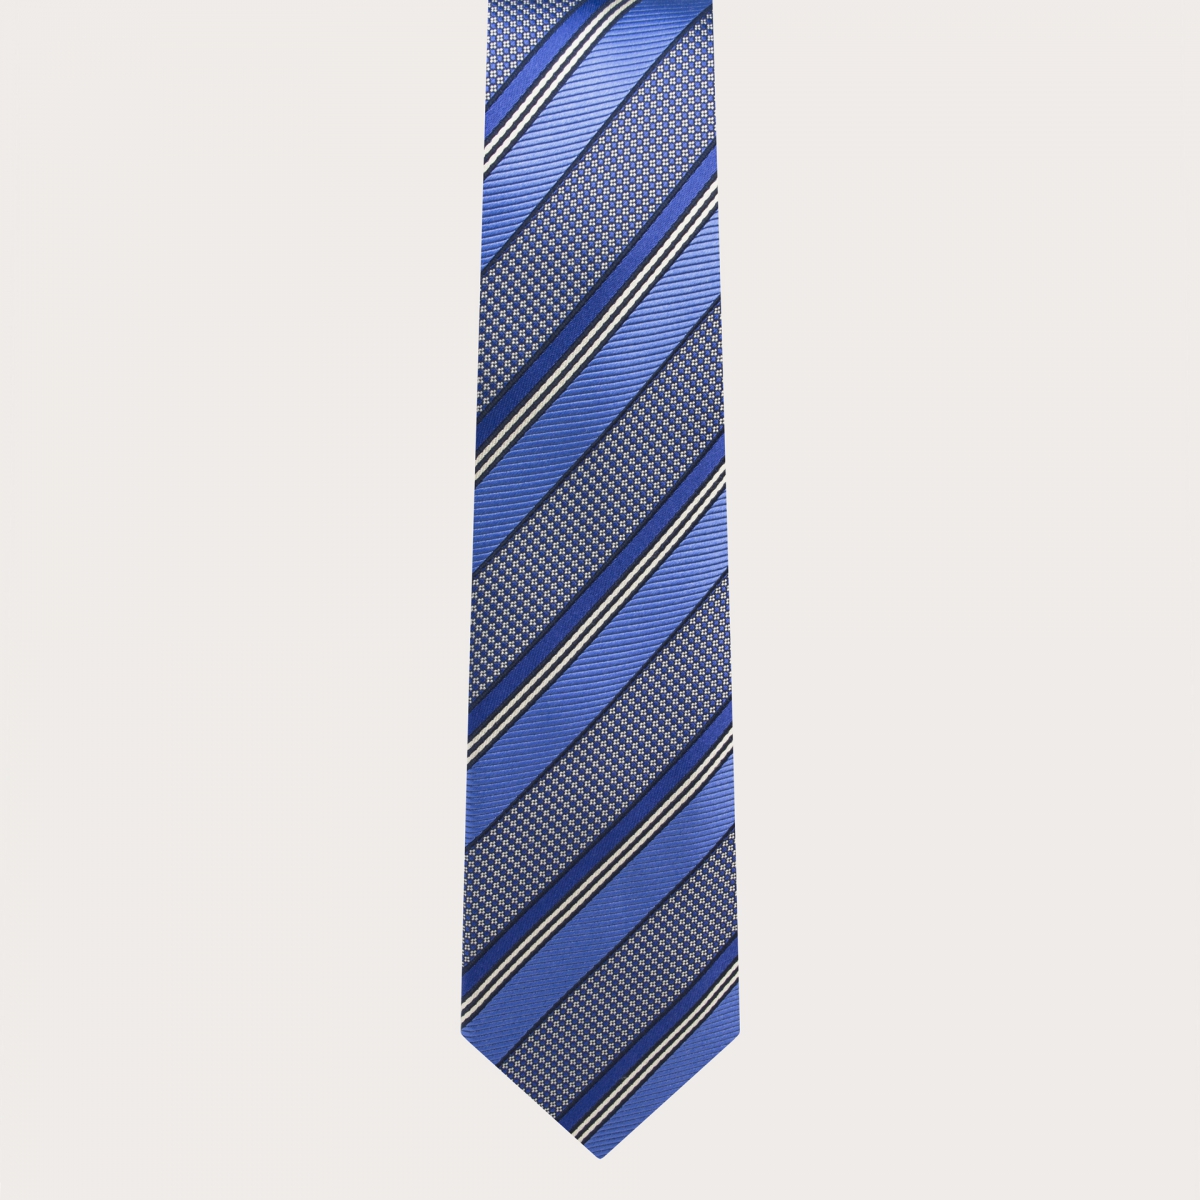 Ceremony tie in jacquard silk with blue regimental pattern